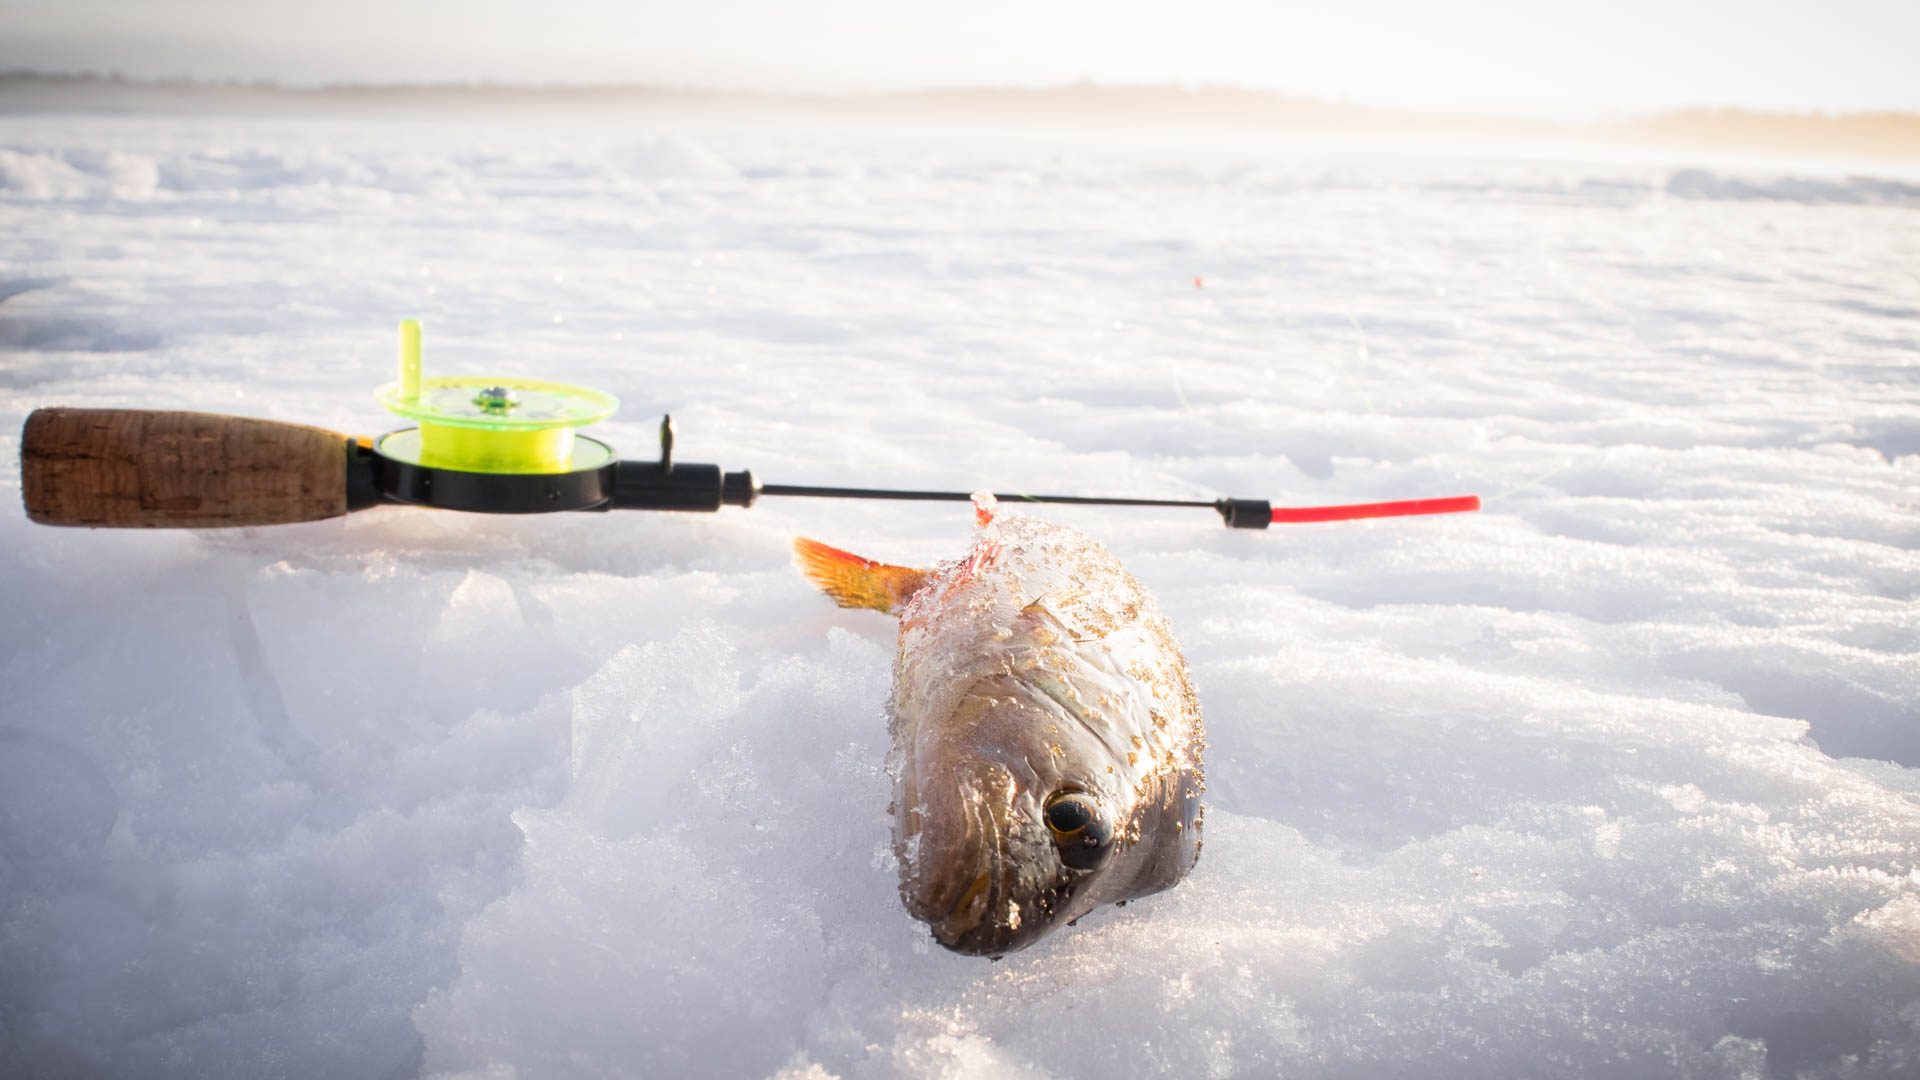 Activities / Snowmobile Safari with Ice Fishing – Levi, Wild Nordic Finland @wildnordicfinland